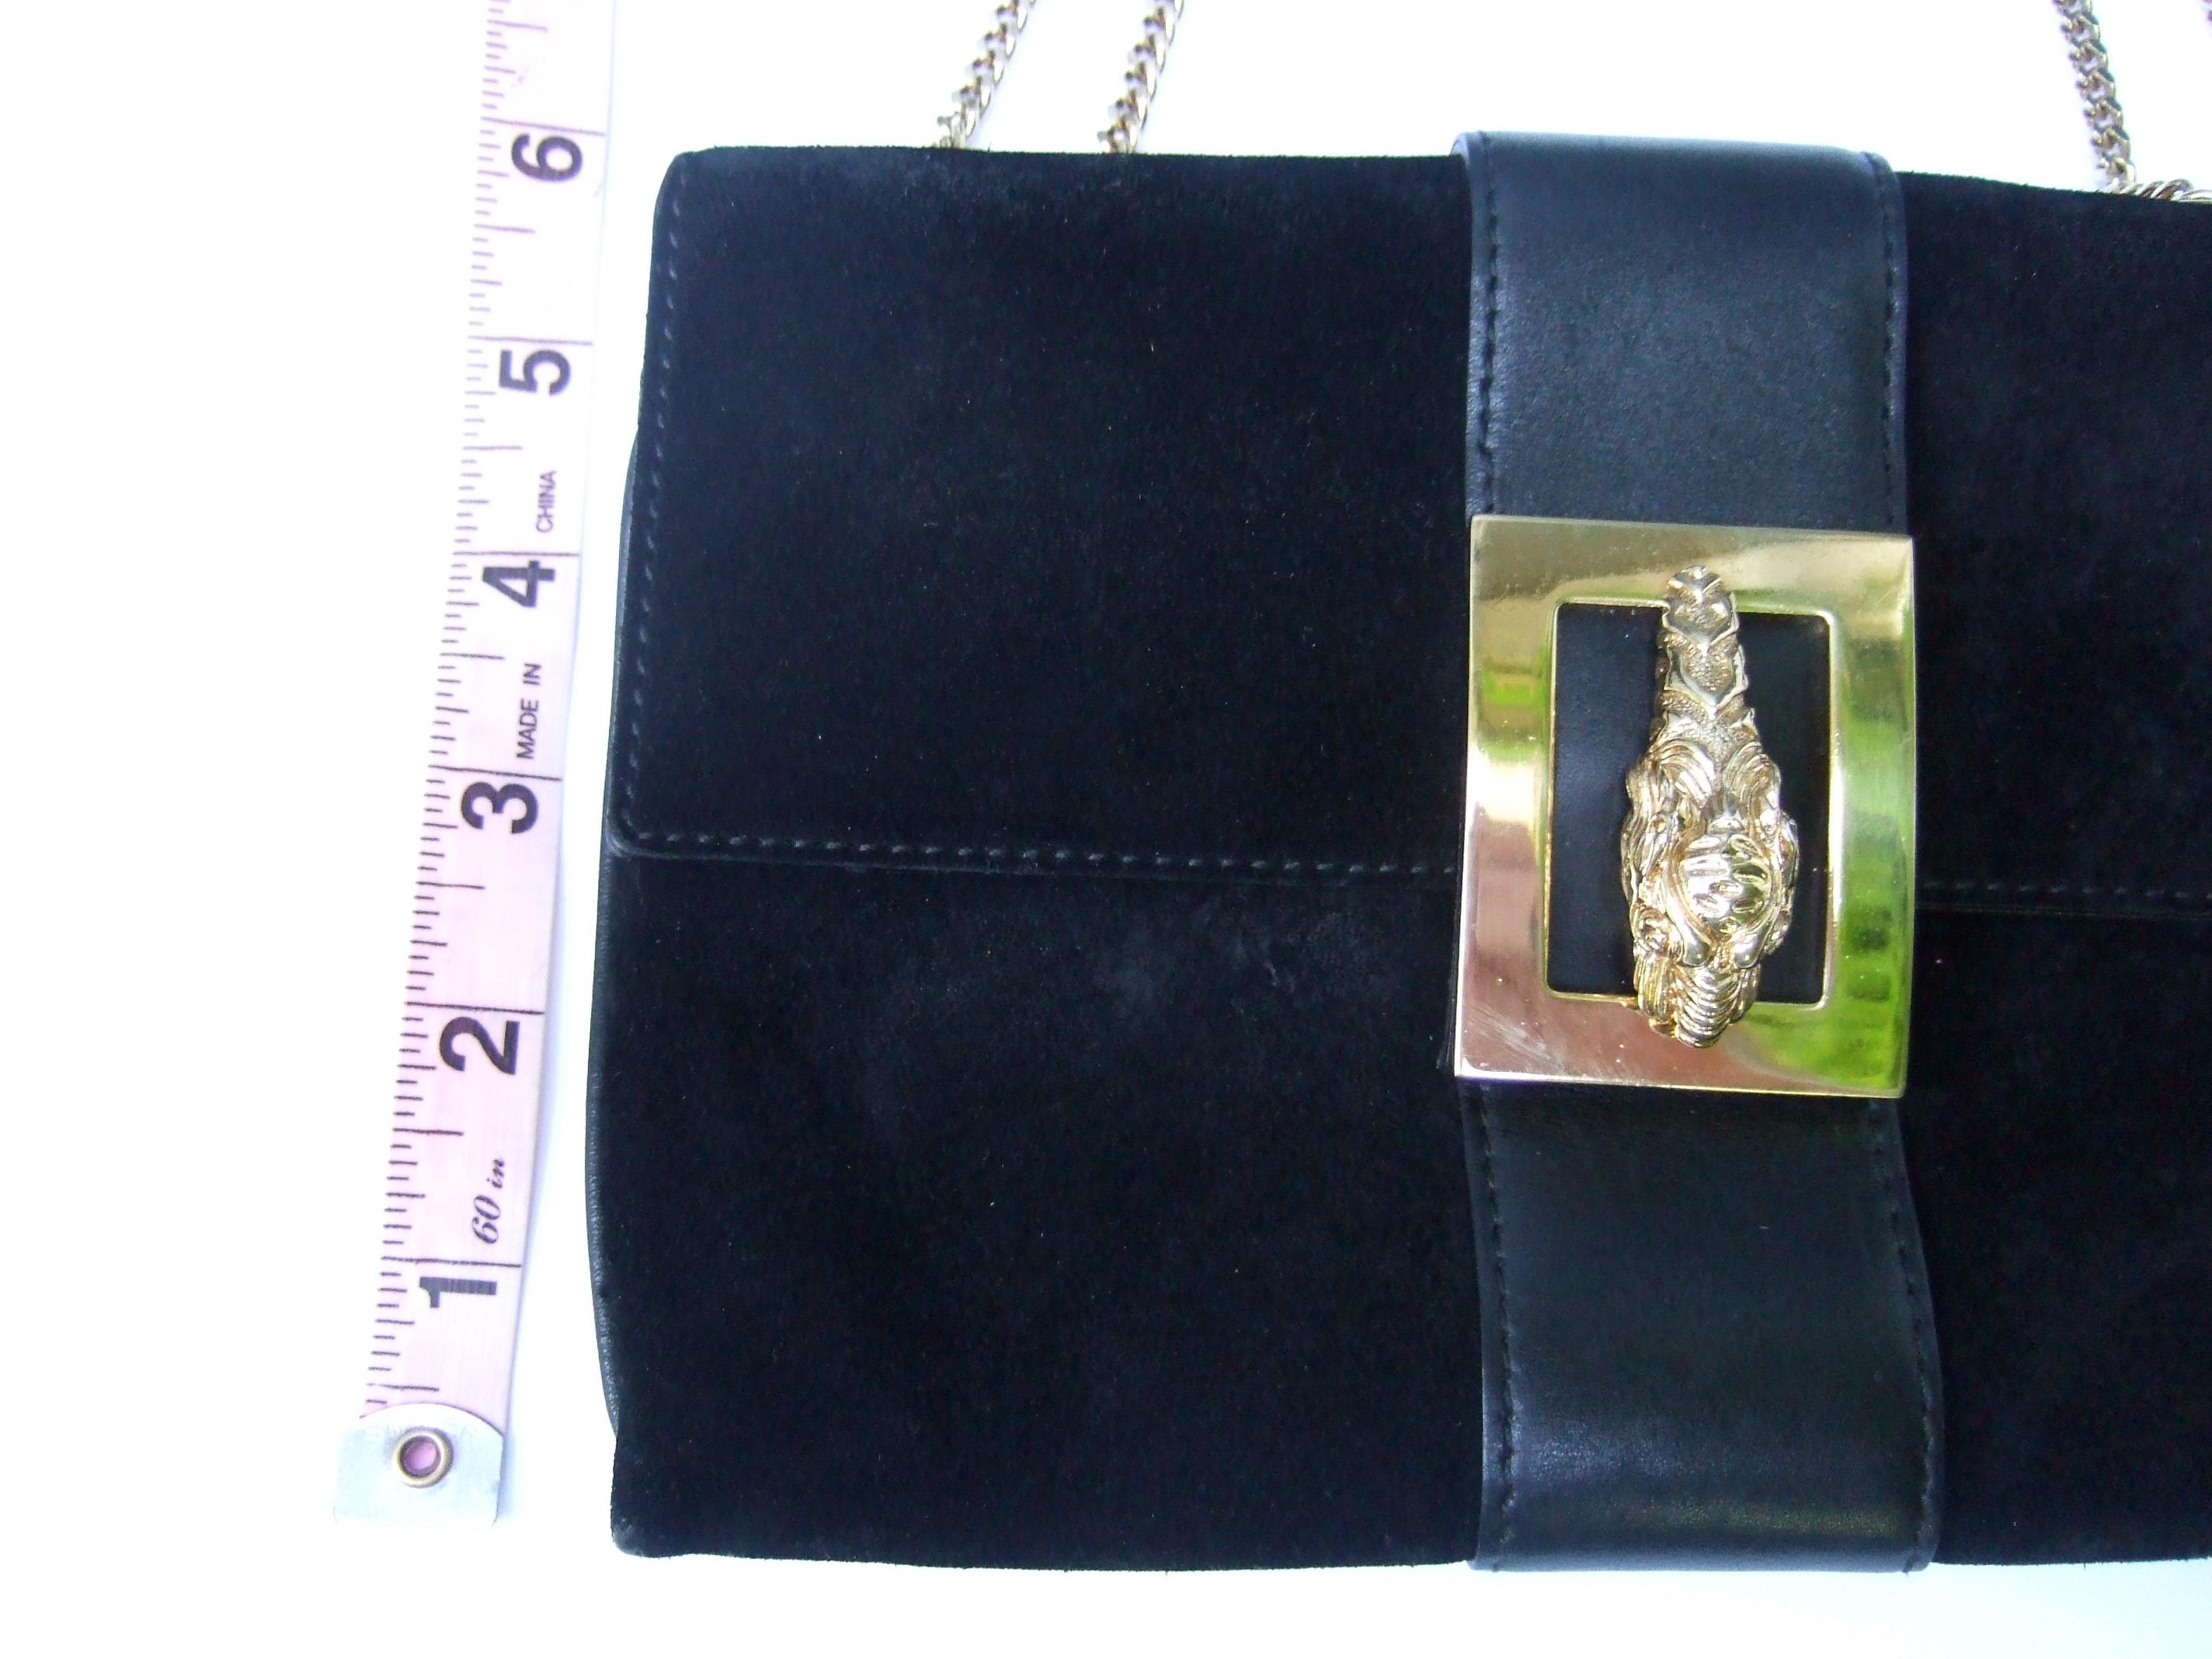 Gucci Italy Rare Black Suede Tiger Emblem Handbag Tom Ford Design c 1990s  For Sale 11